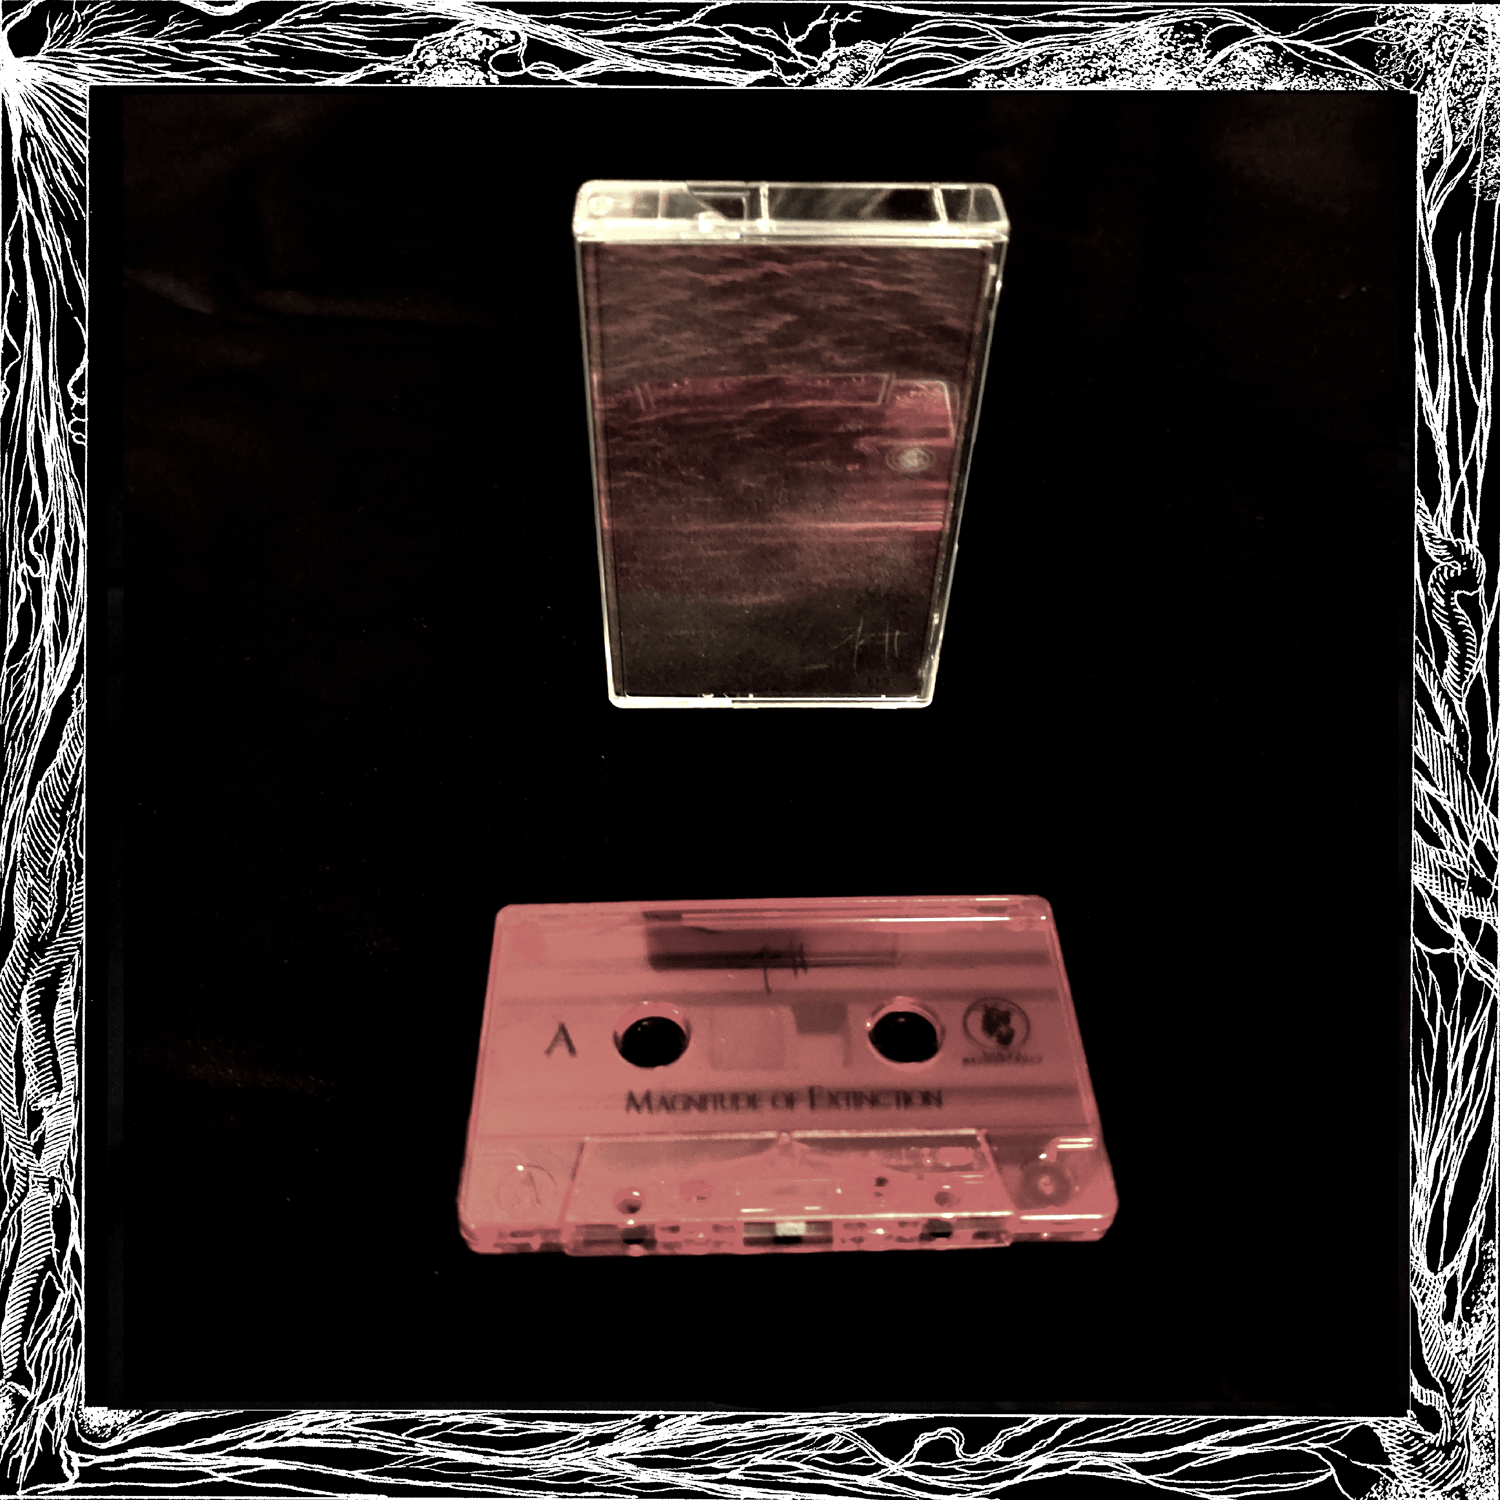 Image of Azoth "Magnitude of Extinction" Cassette Tape